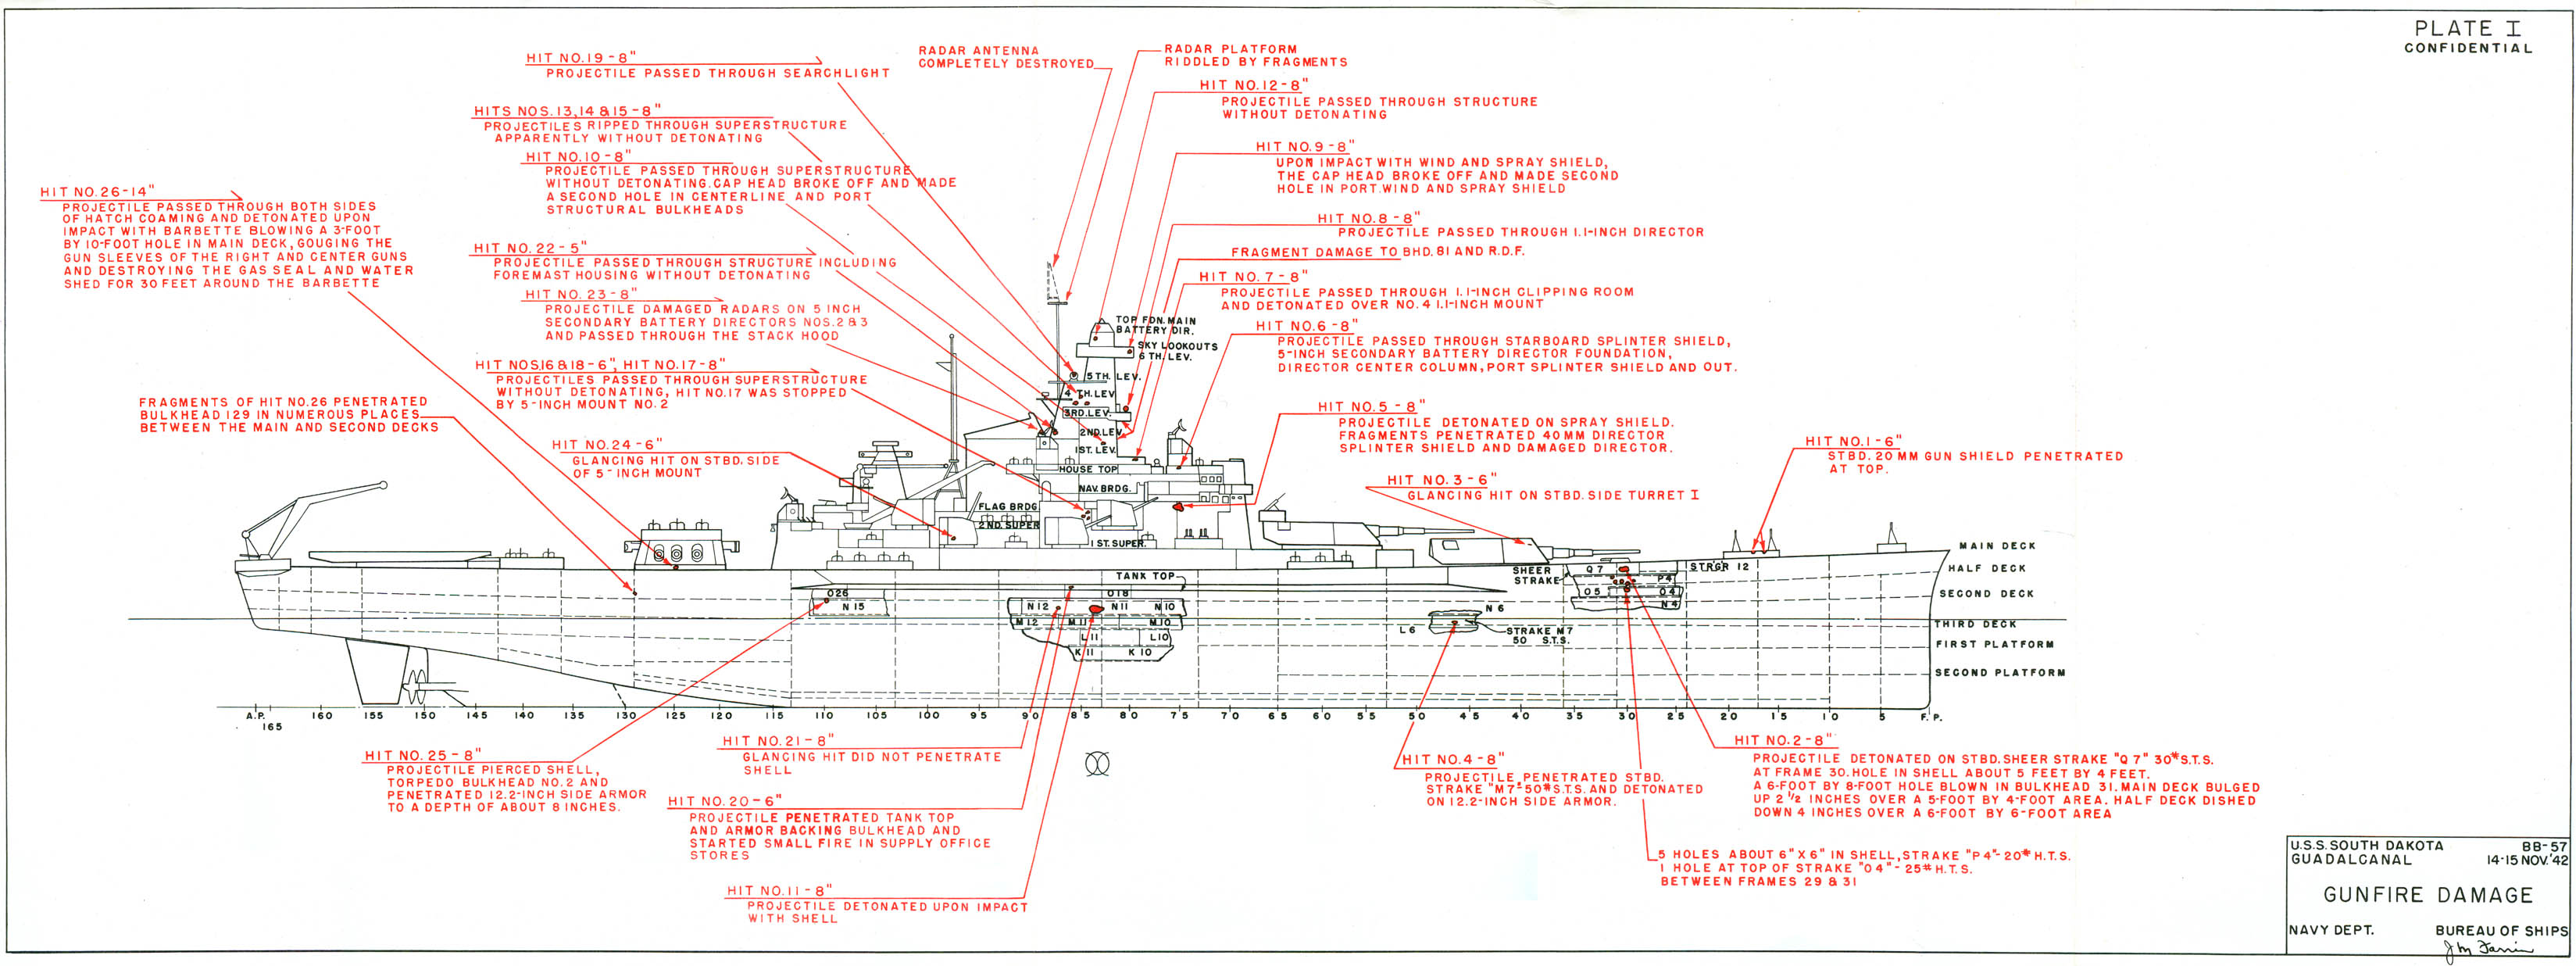 http://www.researcheratlarge.com/Ships/BB57/1942DamageReport/GuadalcanalGunfireDamageReportPlateI.jpg